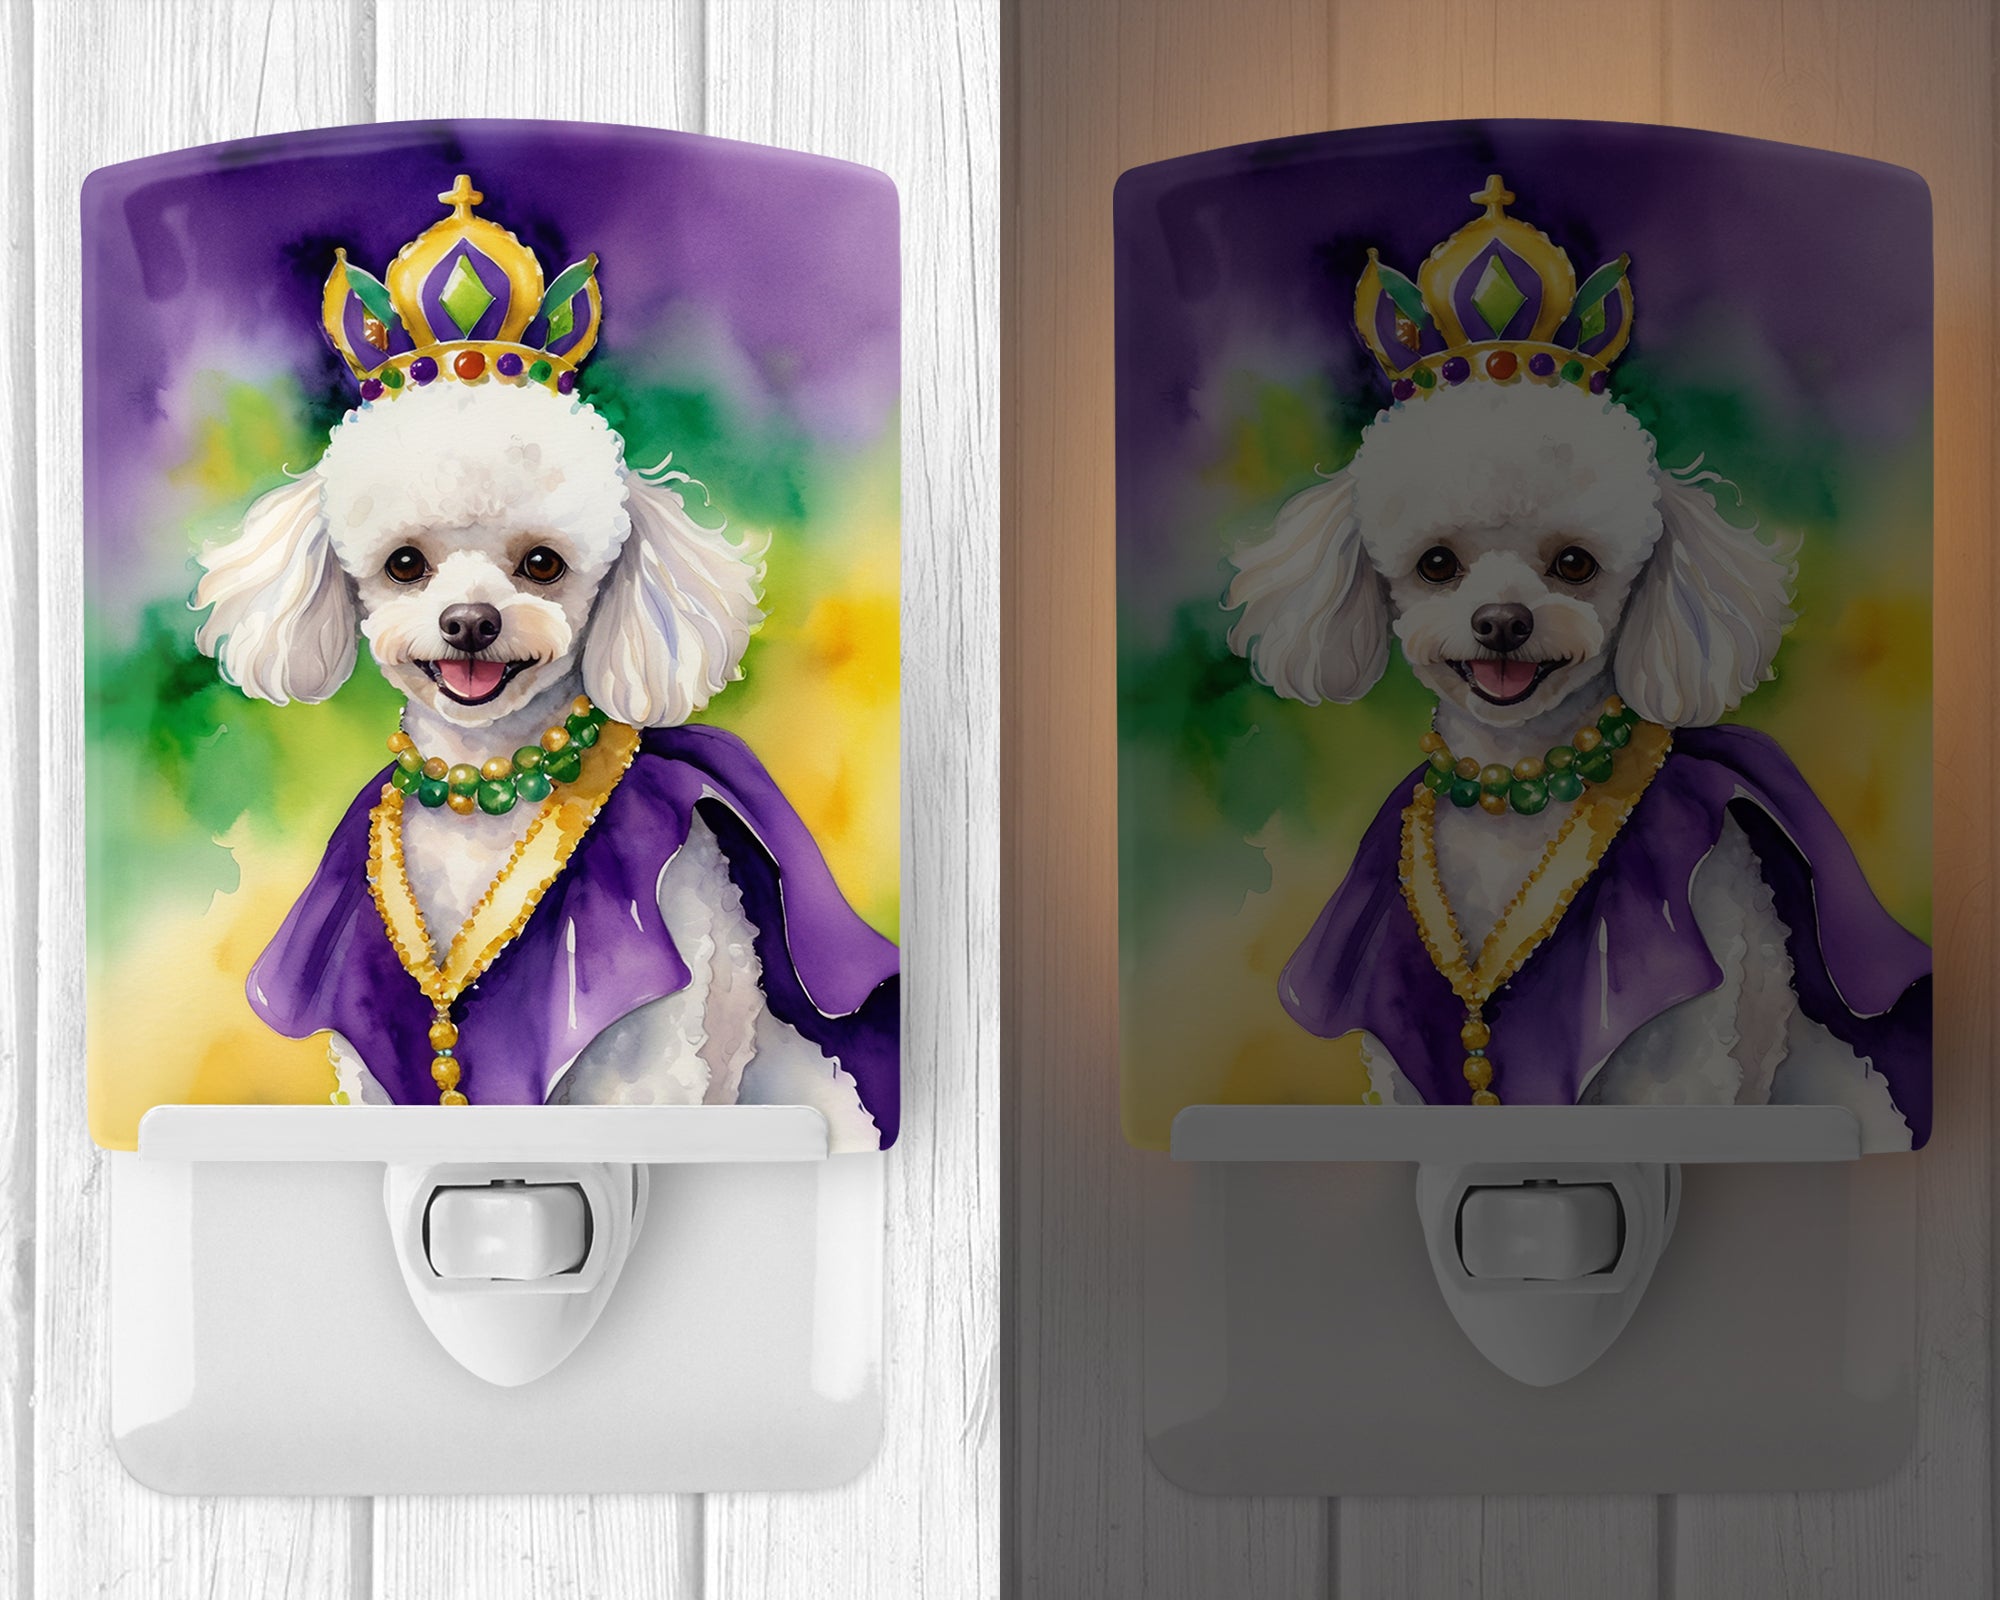 Buy this White Poodle King of Mardi Gras Ceramic Night Light